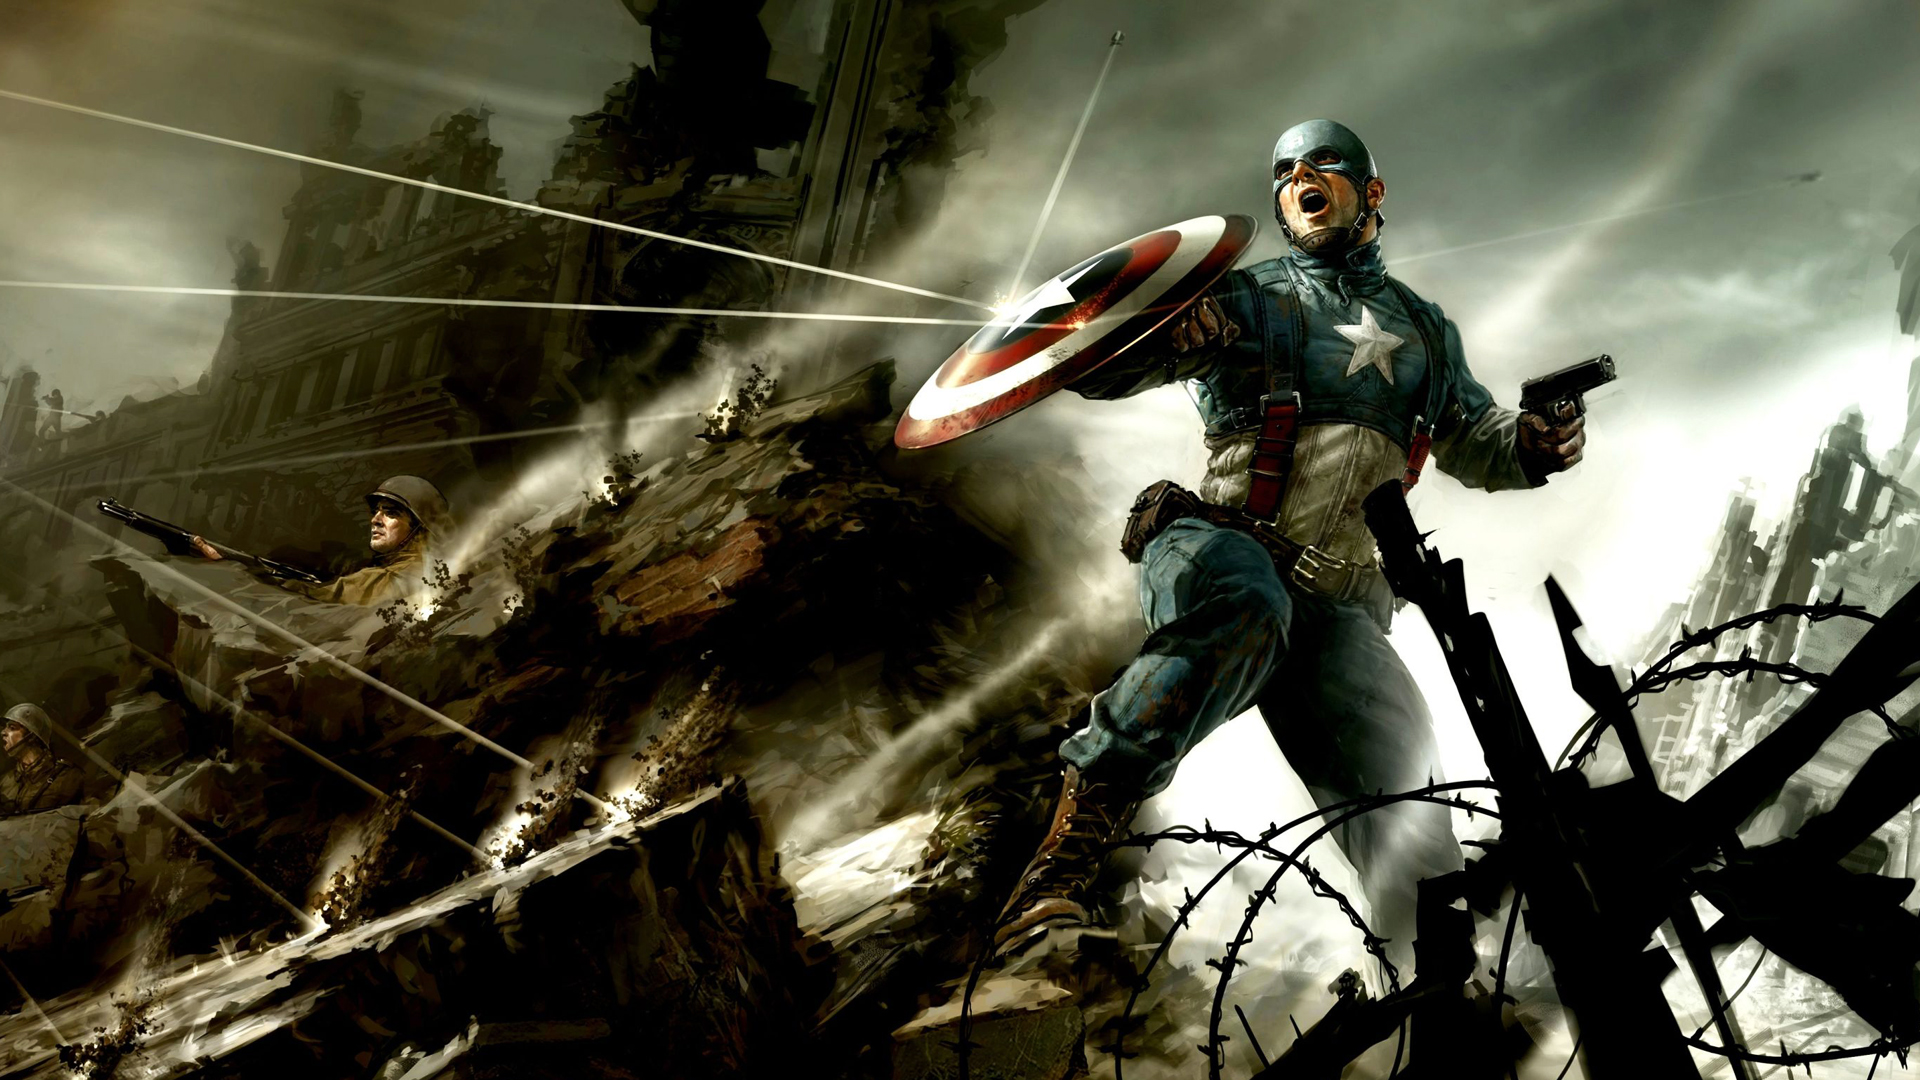 captain america desktop wallpaper,action adventure game,pc game,fictional character,superhero,cg artwork